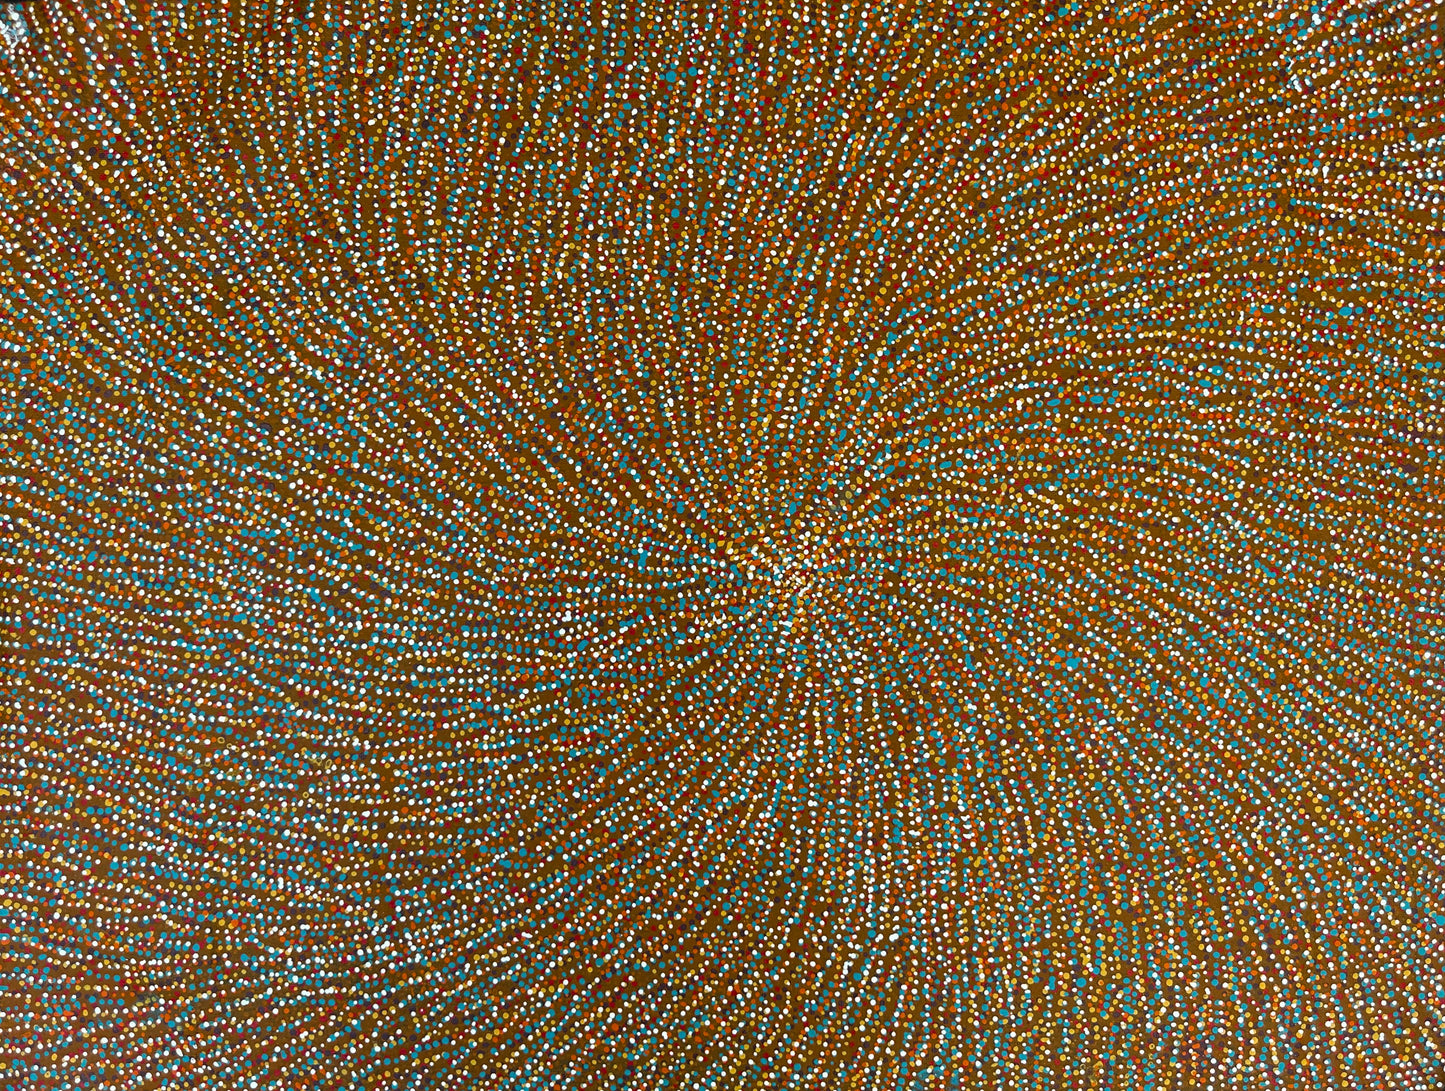 Katie Rumble Pitjarra Petyarre + Utopia + Bush Plum + Indigeous Art + Aboriginal Art + Australian Art + Darwin Based Gallery + Traditional Art + Contemporary Art + Art Story + Bush Plum Dreaming + Art for Sale + Painting For Sale